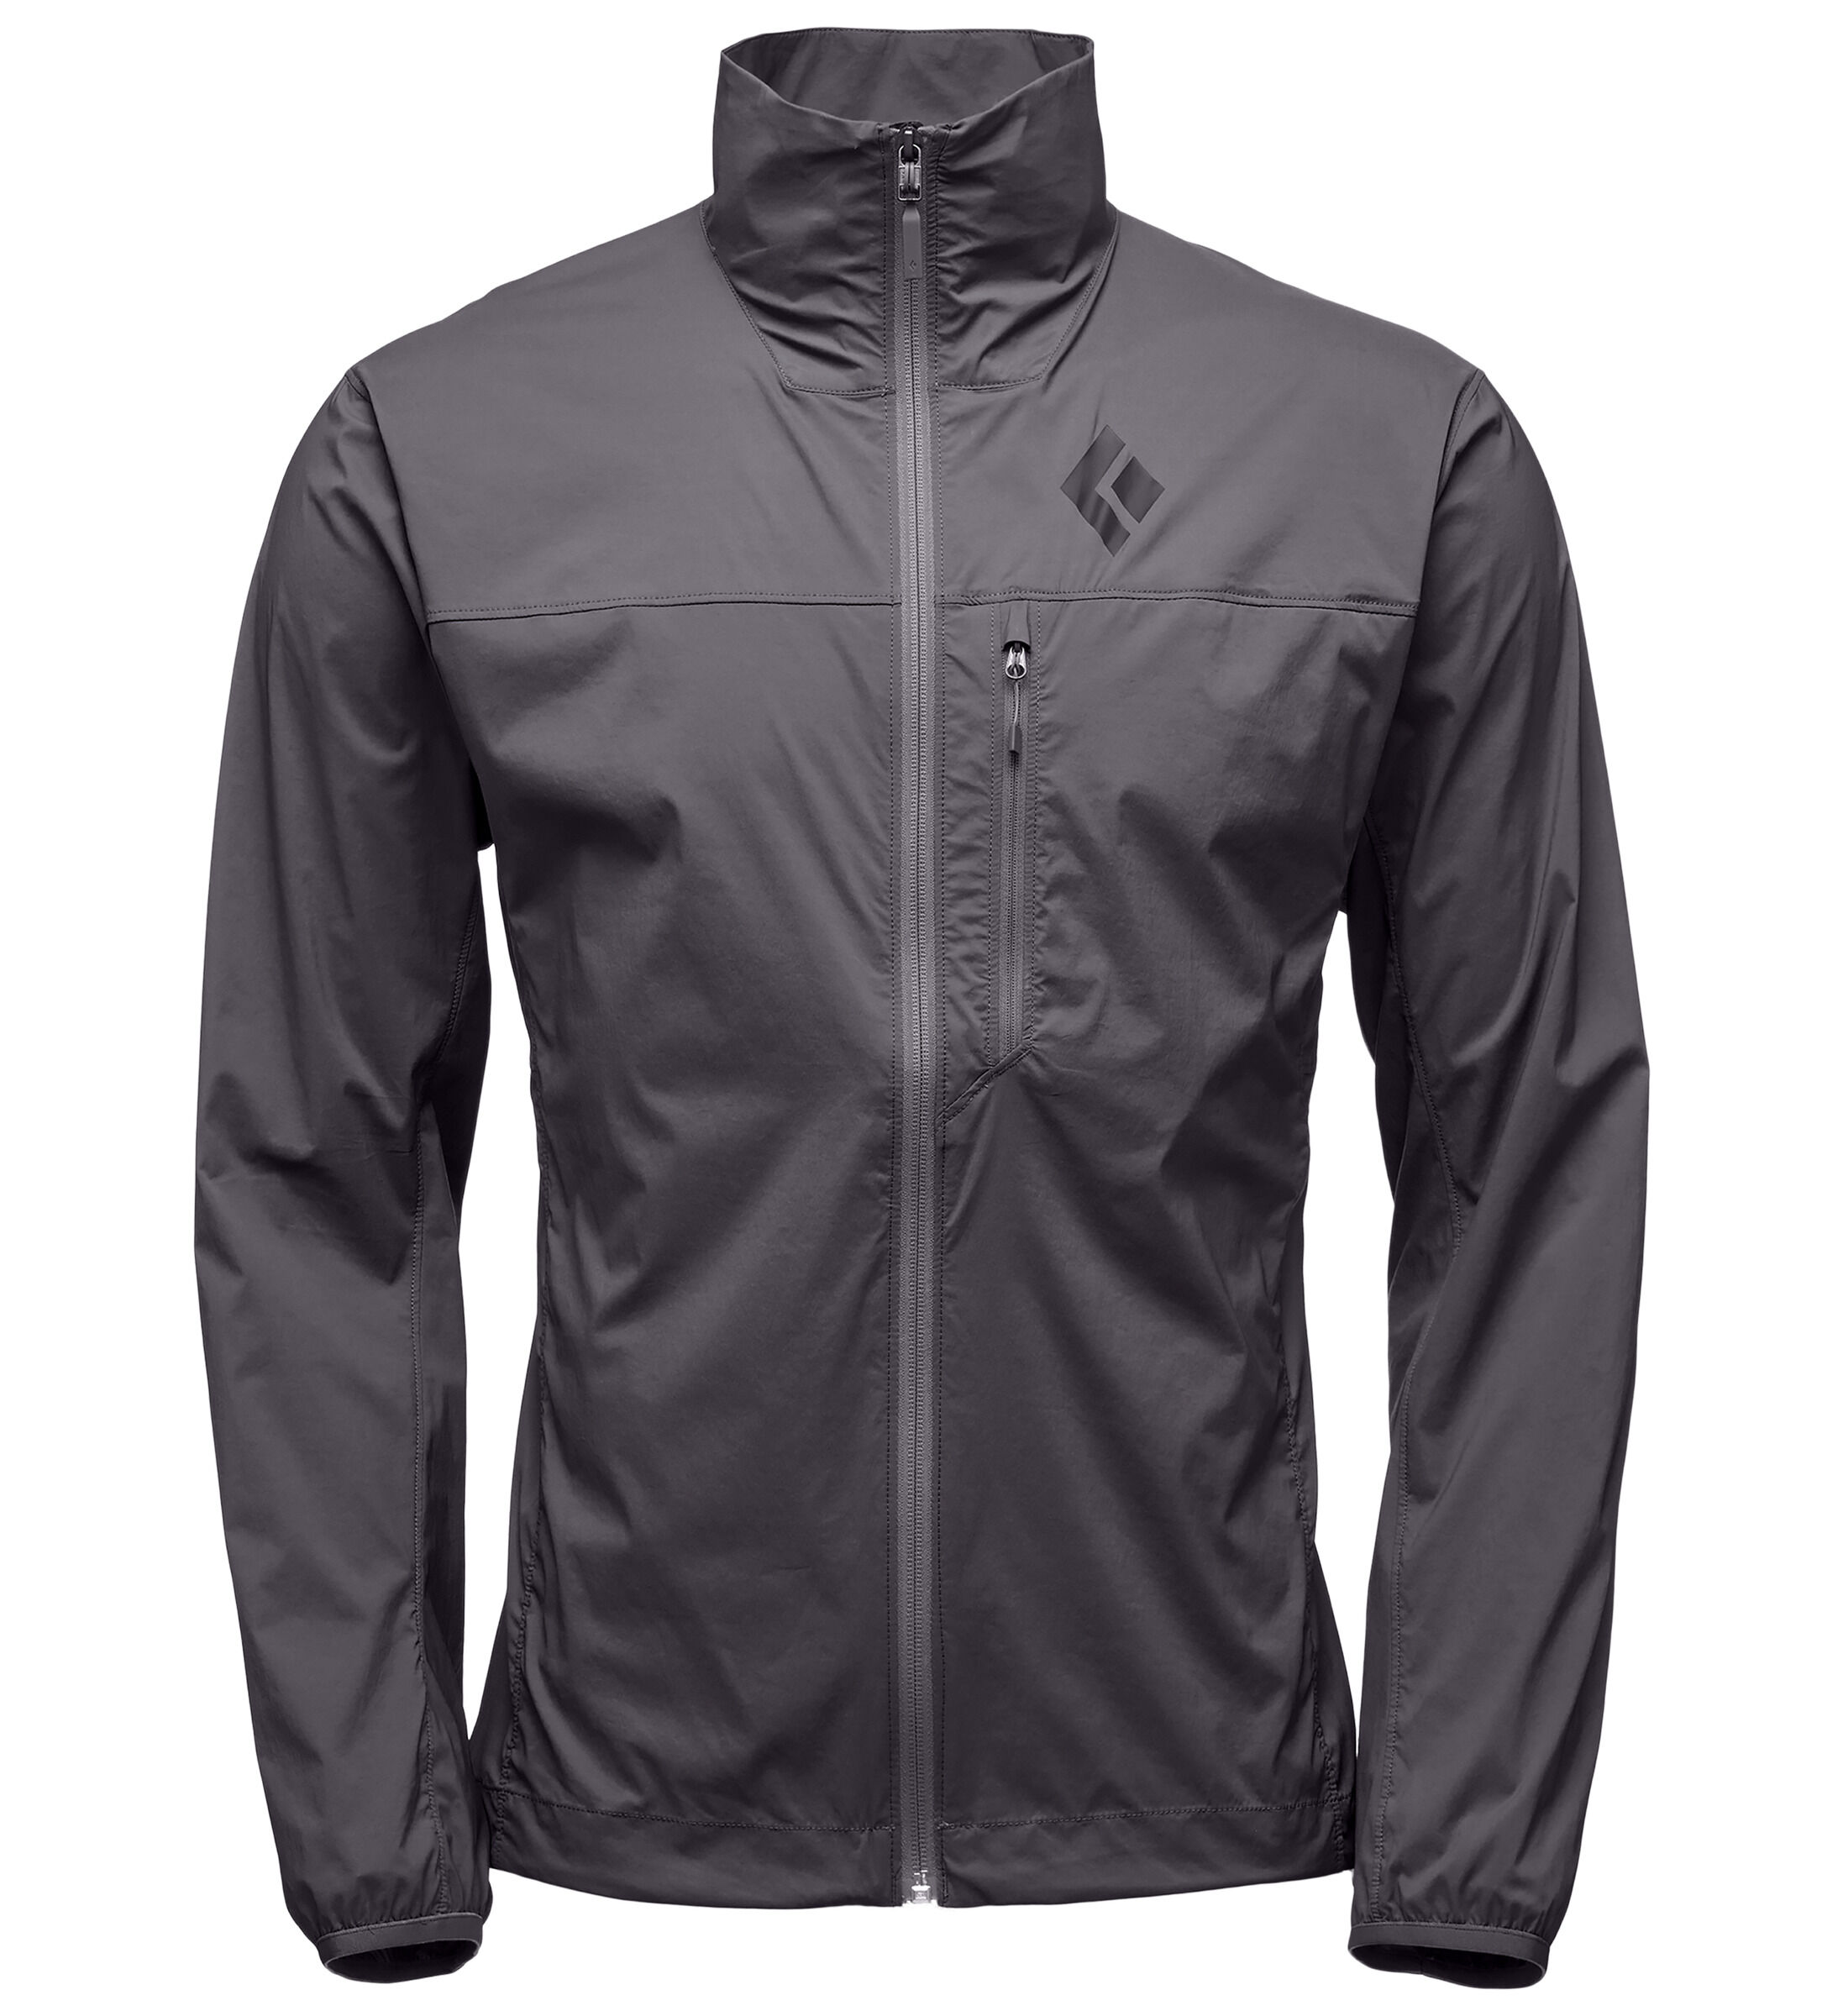 Black Diamond - Alpine Start Jacket - Wind jacket - Men's